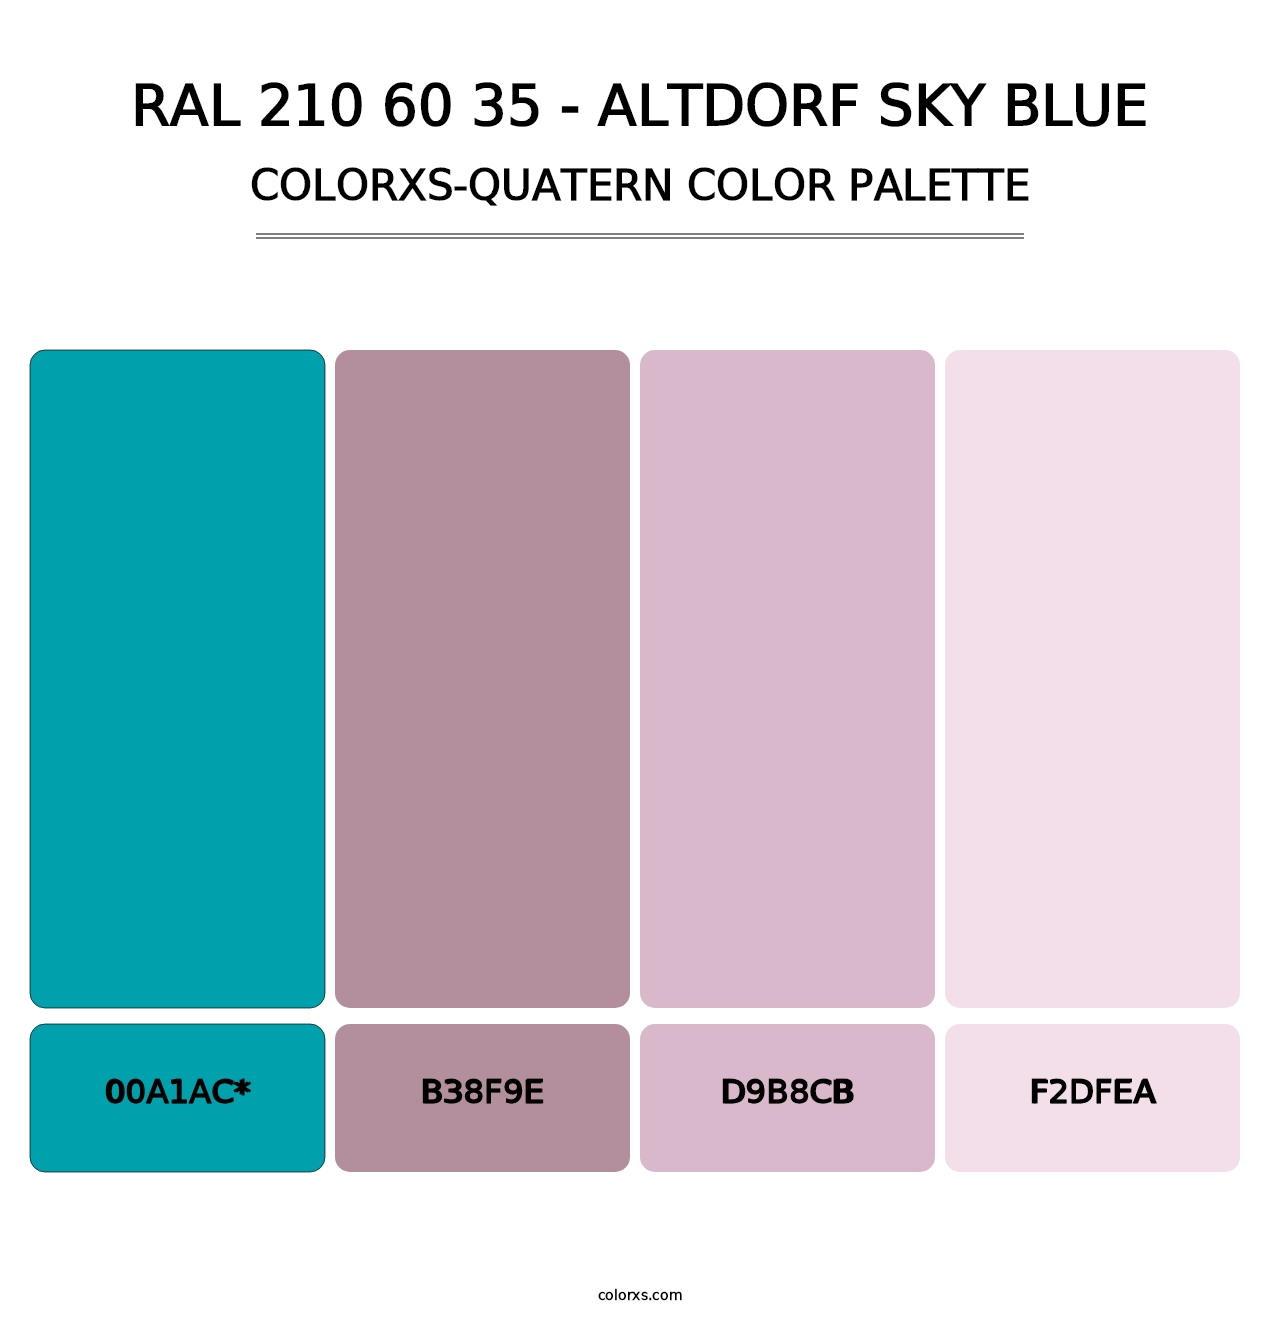 RAL 210 60 35 - Altdorf Sky Blue - Colorxs Quatern Palette